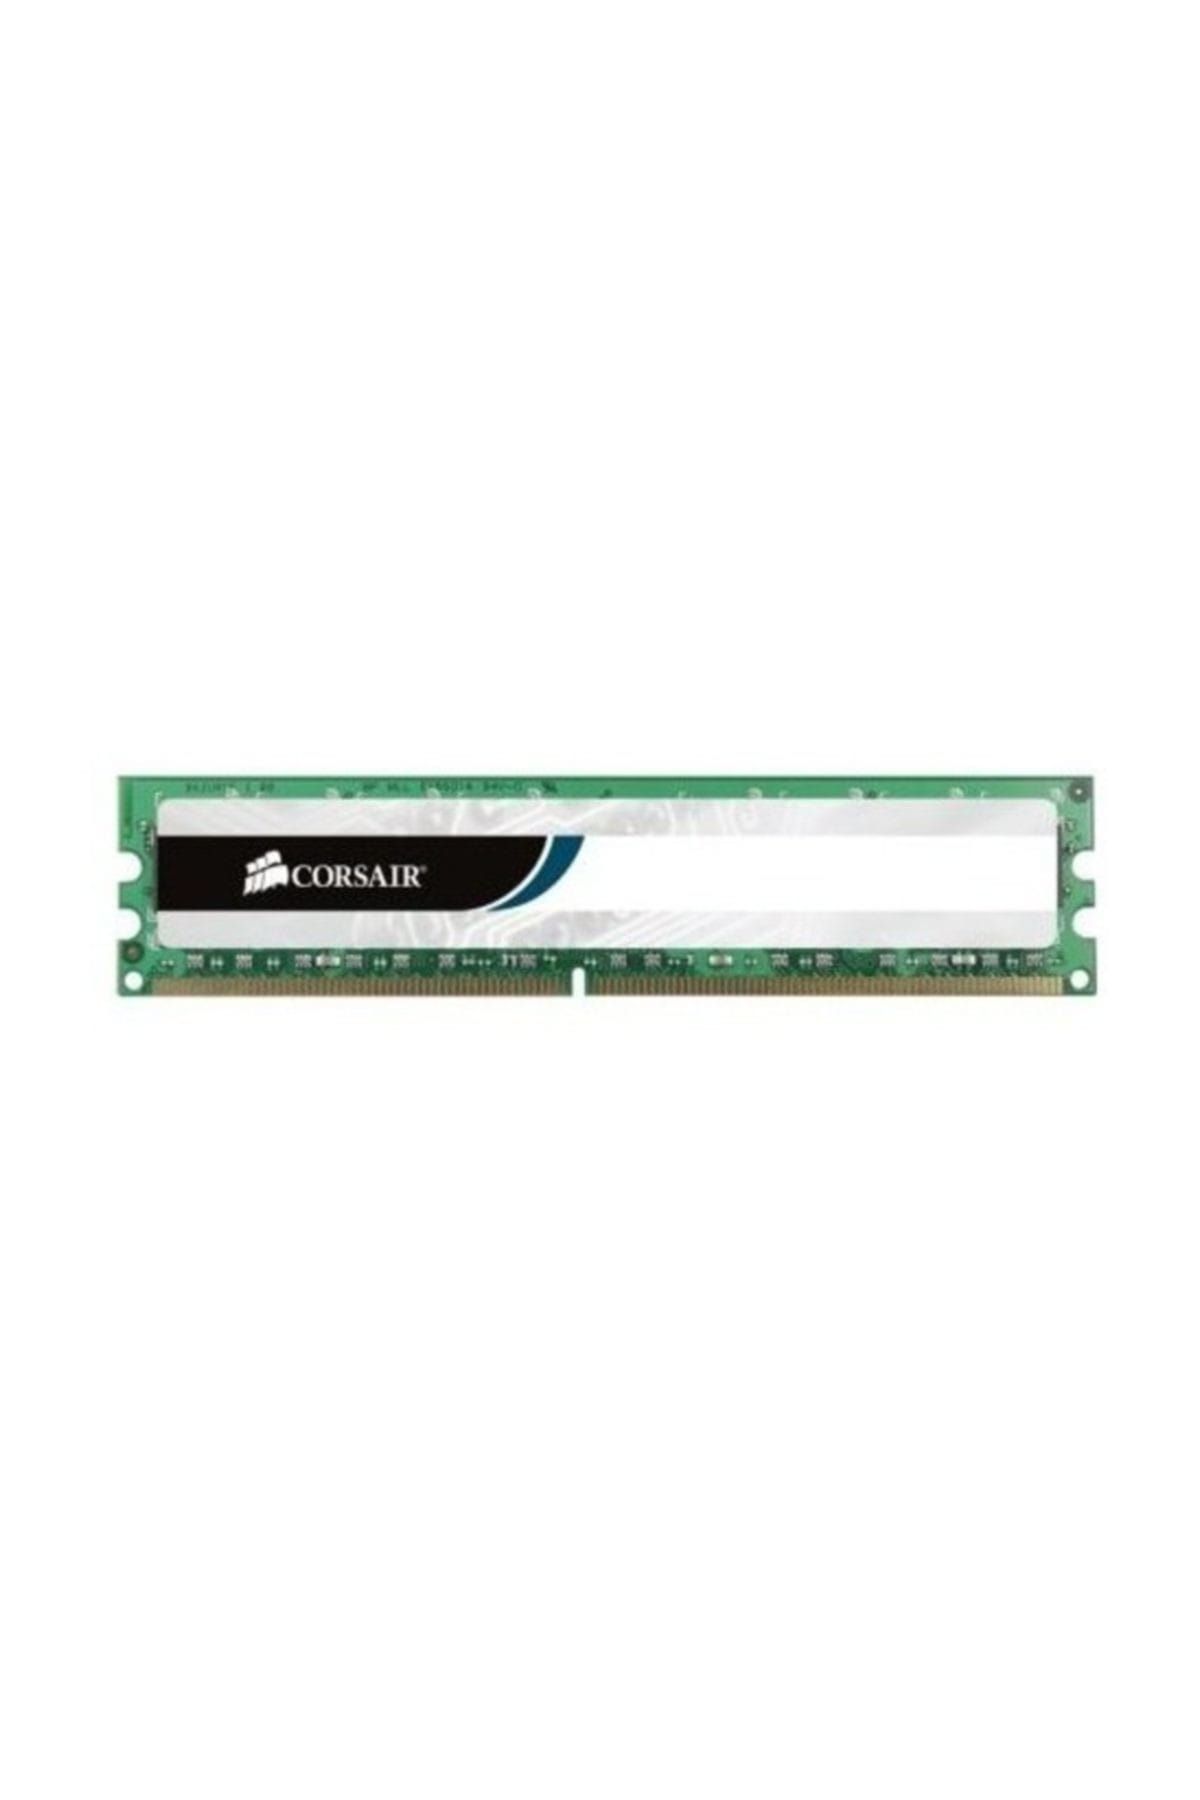 Corsair 4GB 1600MHz DDR3 Ram (CMV4GX3M1A1600C11)